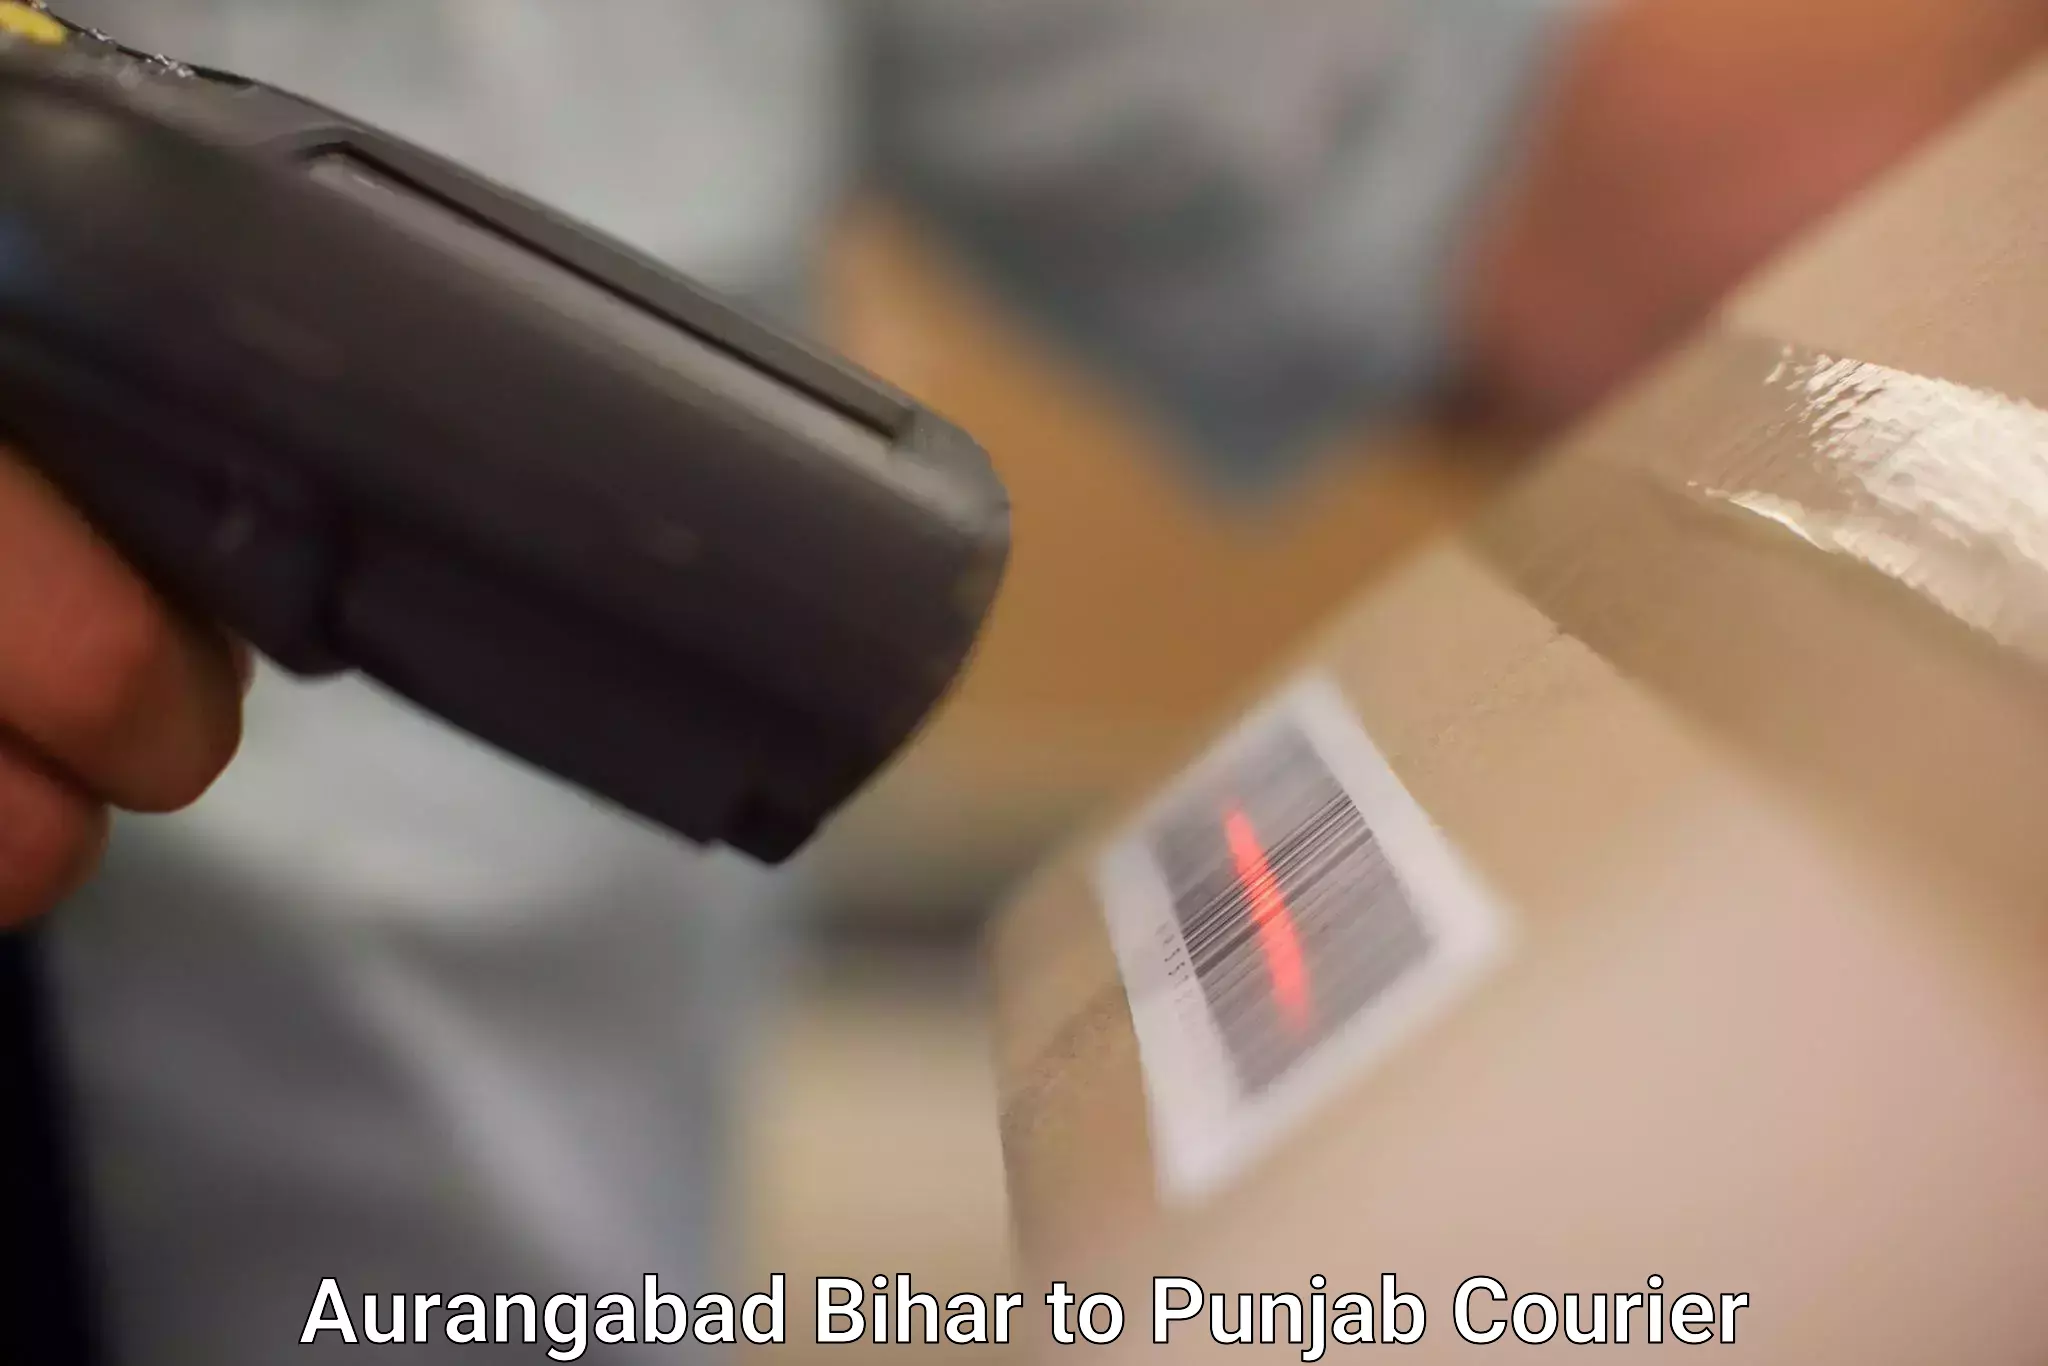 Courier service partnerships in Aurangabad Bihar to Beas